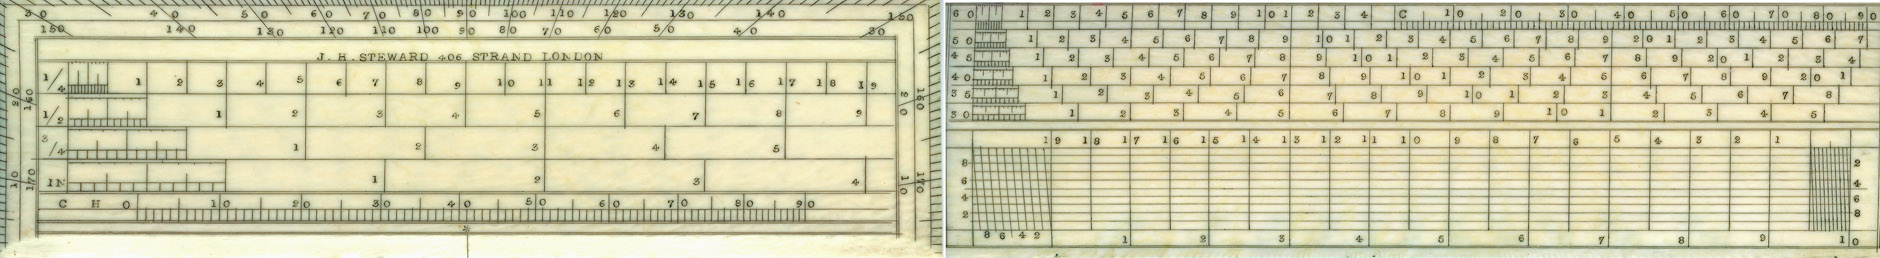 J.H. Steward NoName Pocket Recatangular Protractor/Diagonal Scale